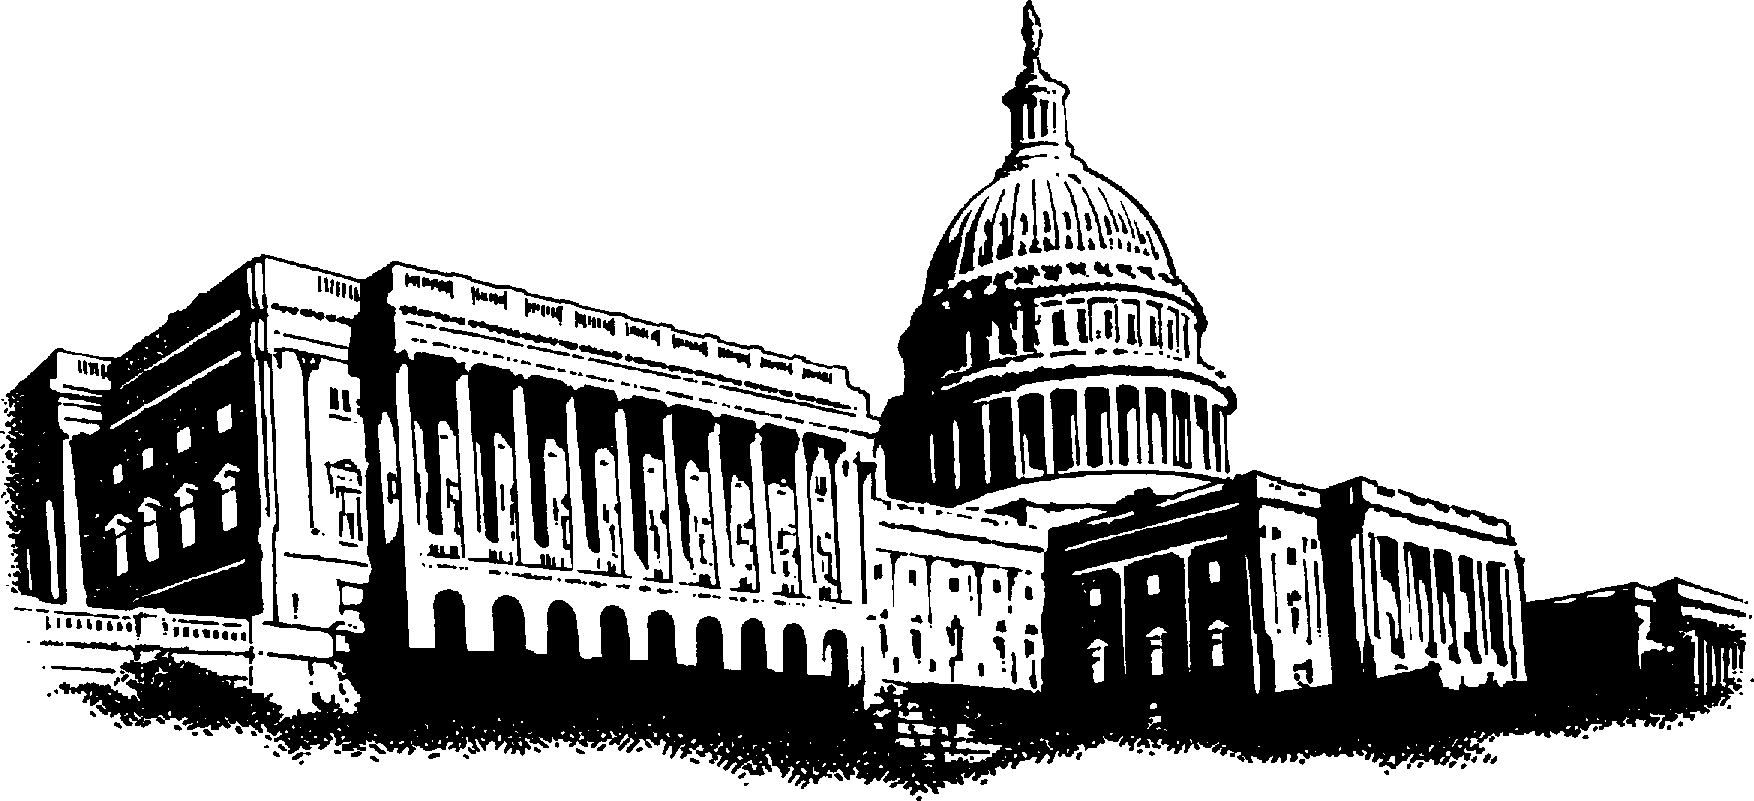 legislative building clipart image